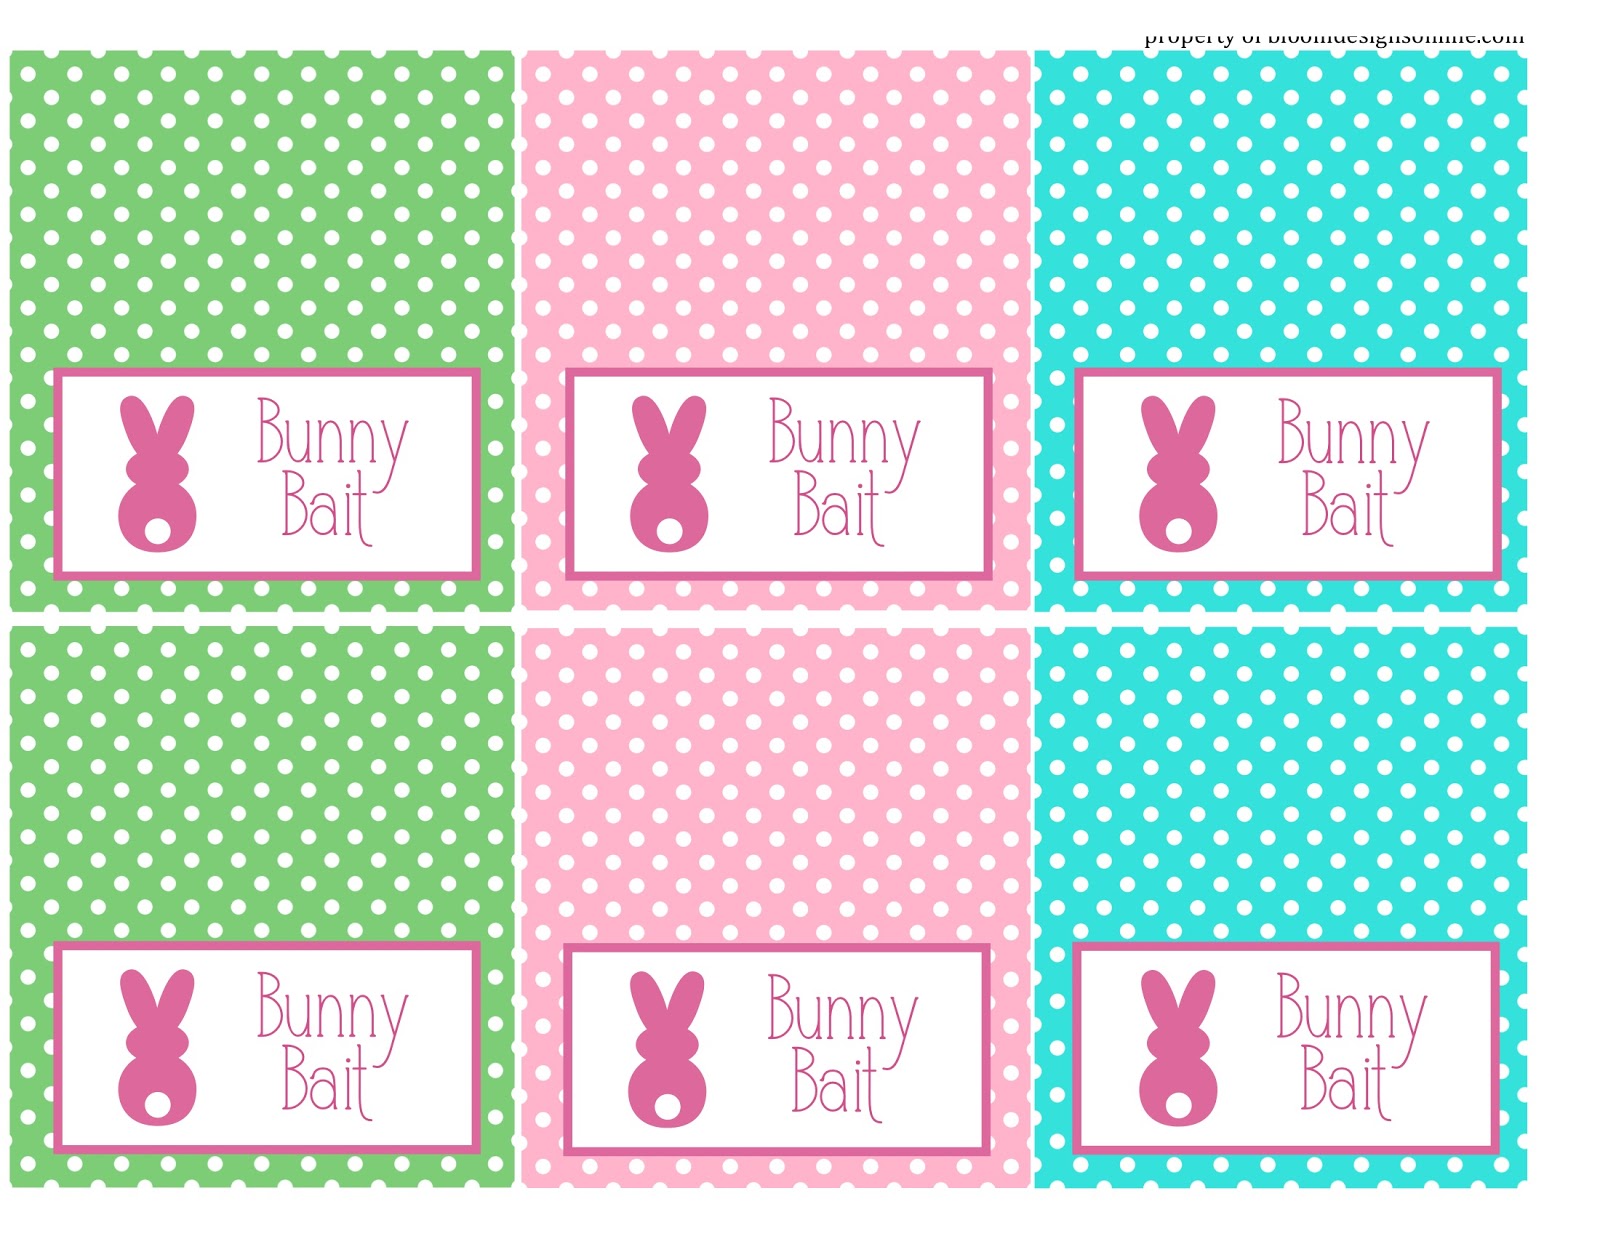 bloom-designs-free-bunny-bait-tags-bunny-bait-easter-fun-bunny